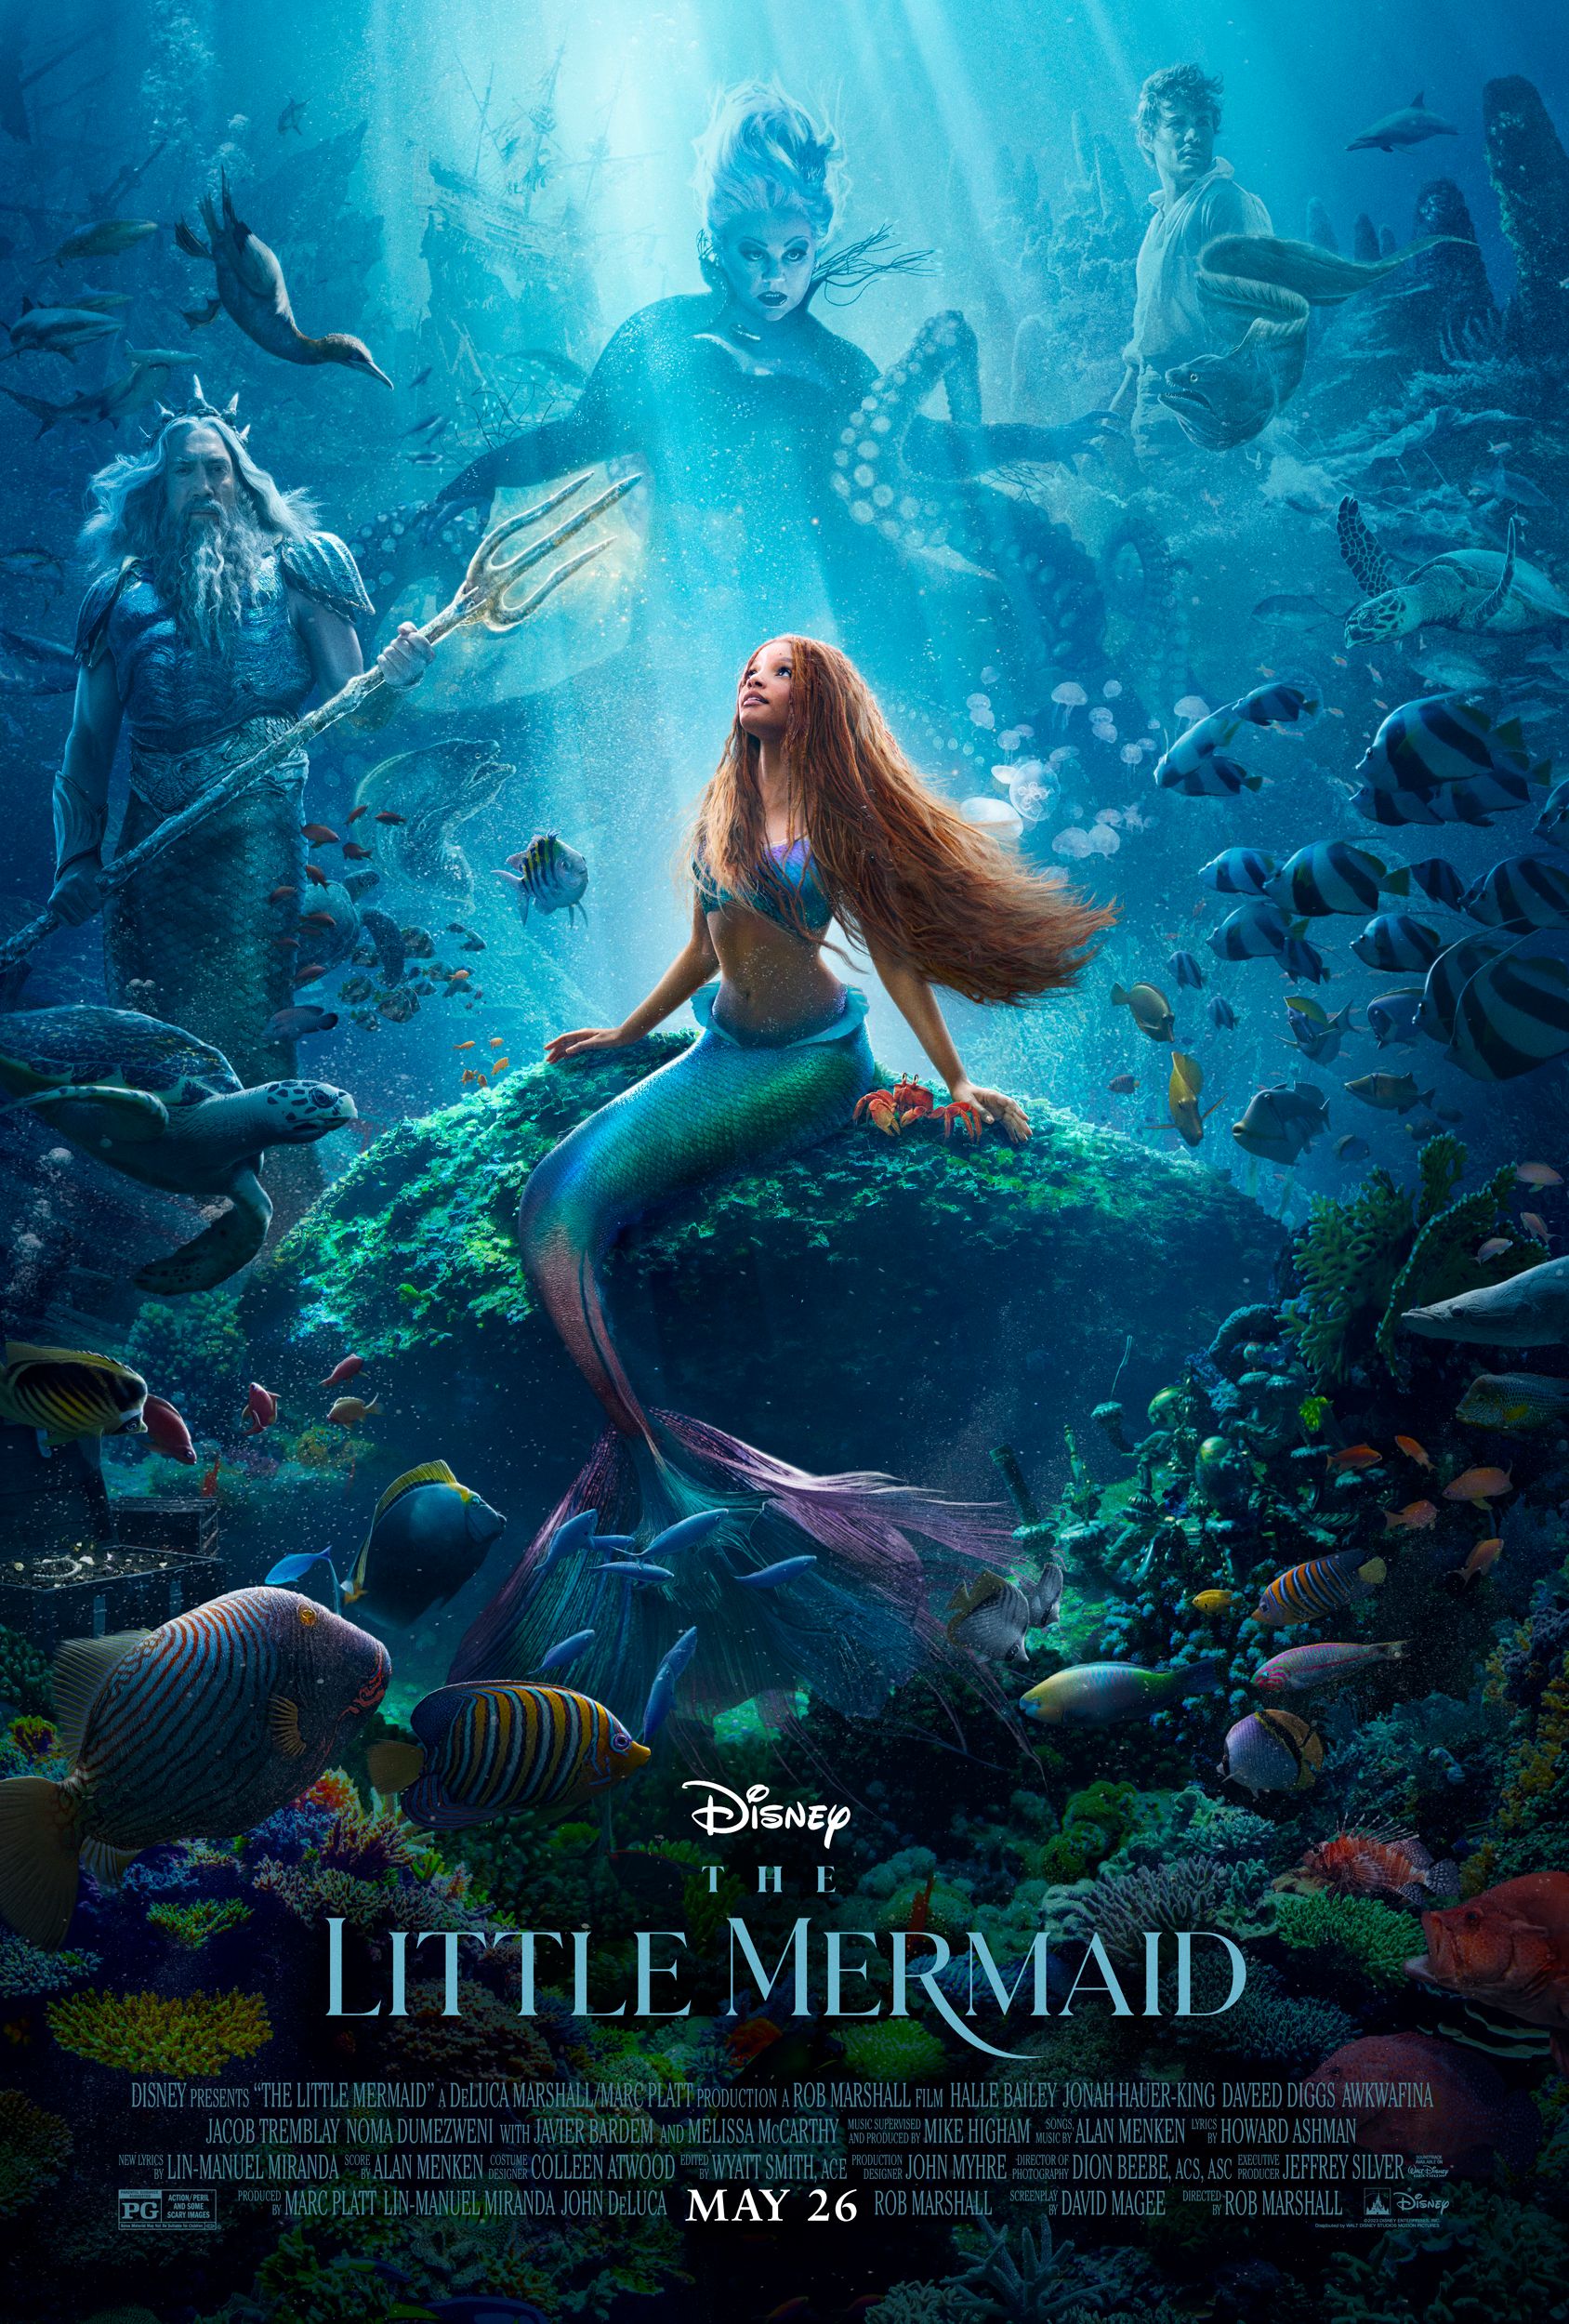 Disney's The Little Mermaid Early Access Screening